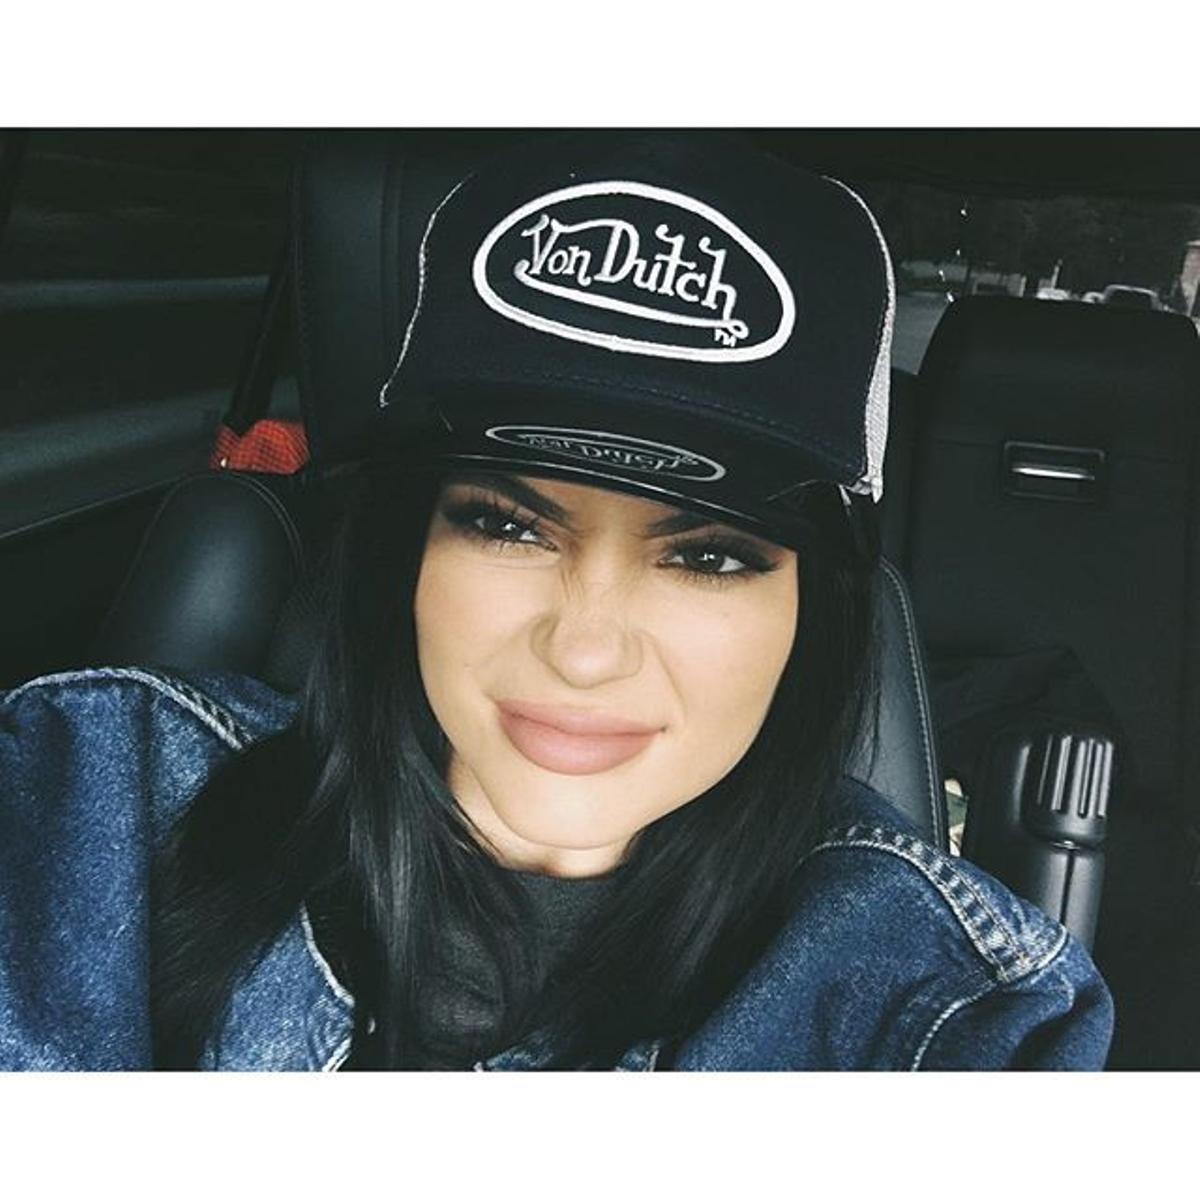 La cuenta de Snapchat de Kylie Jenner